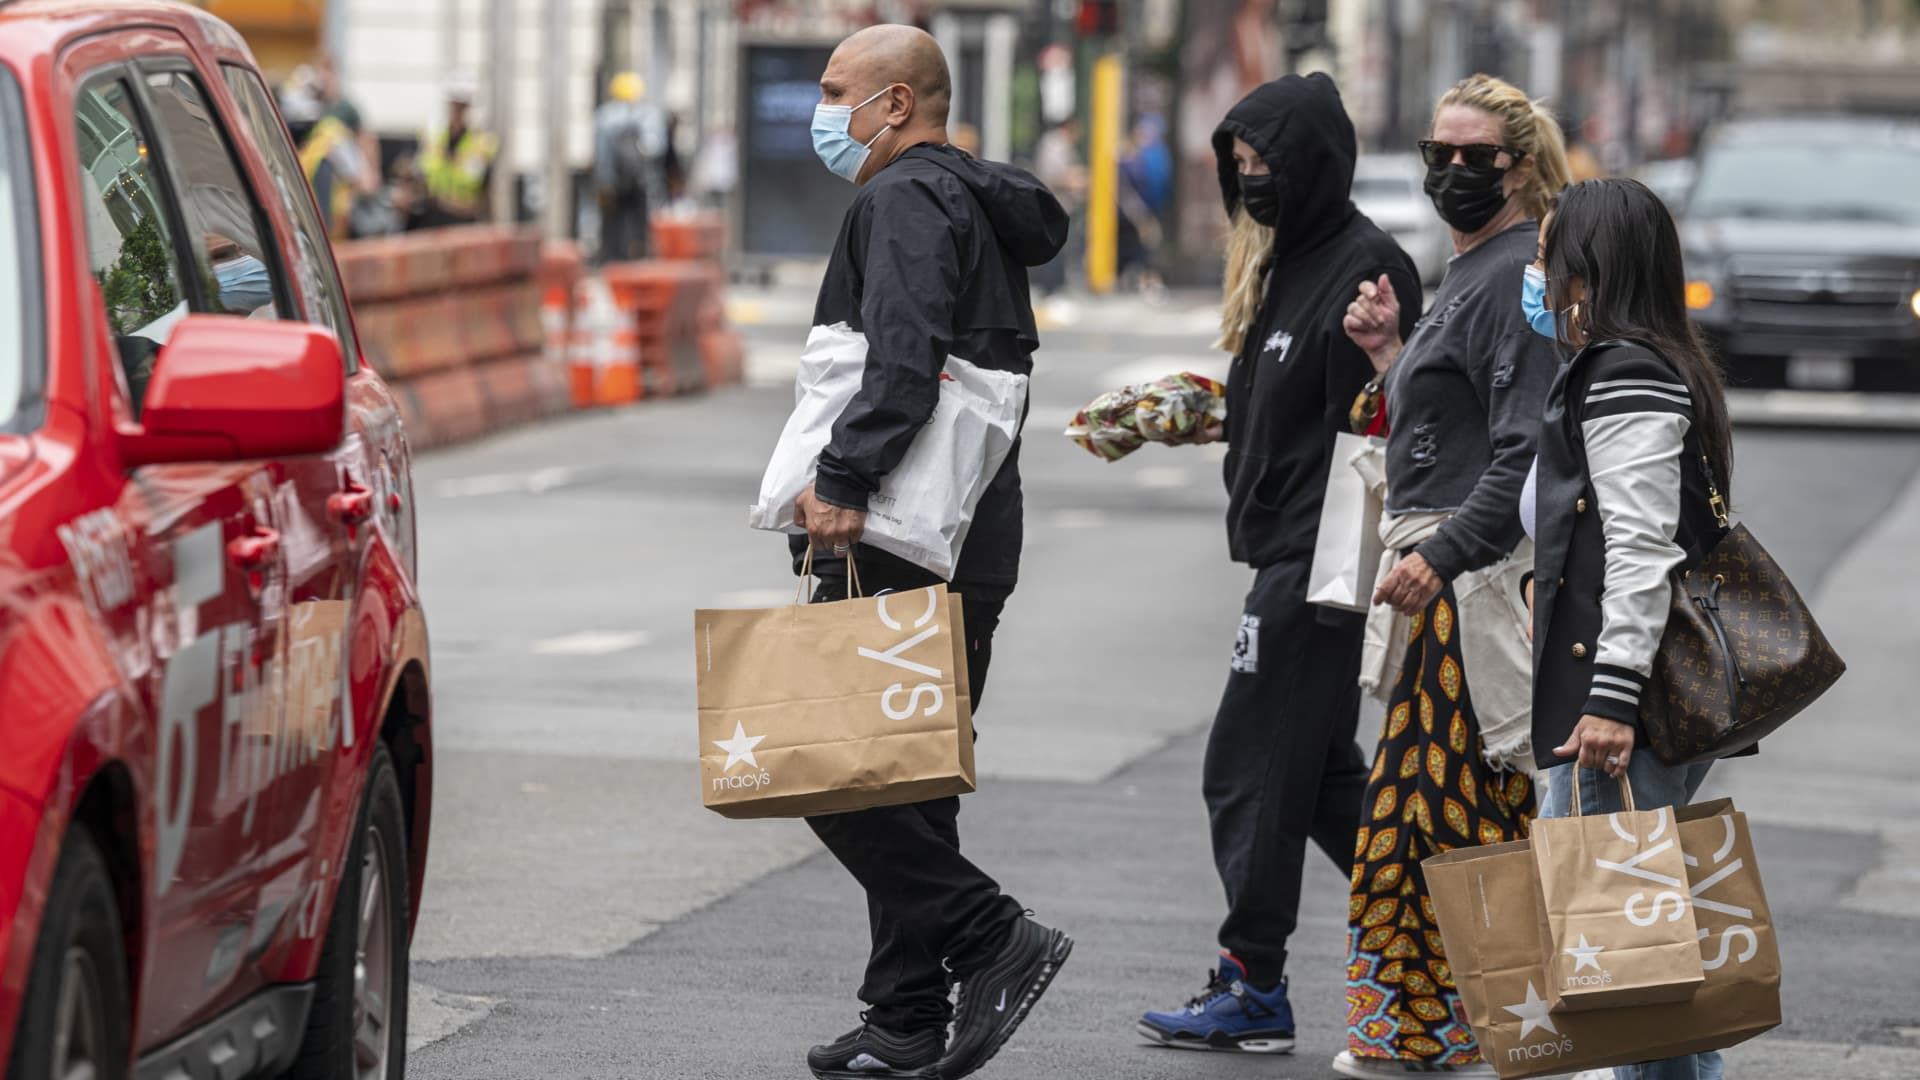 Pedestrians carry Macy's shopping bags in San Francisco, California, U.S., on Thursday, Sept. 16, 2021.